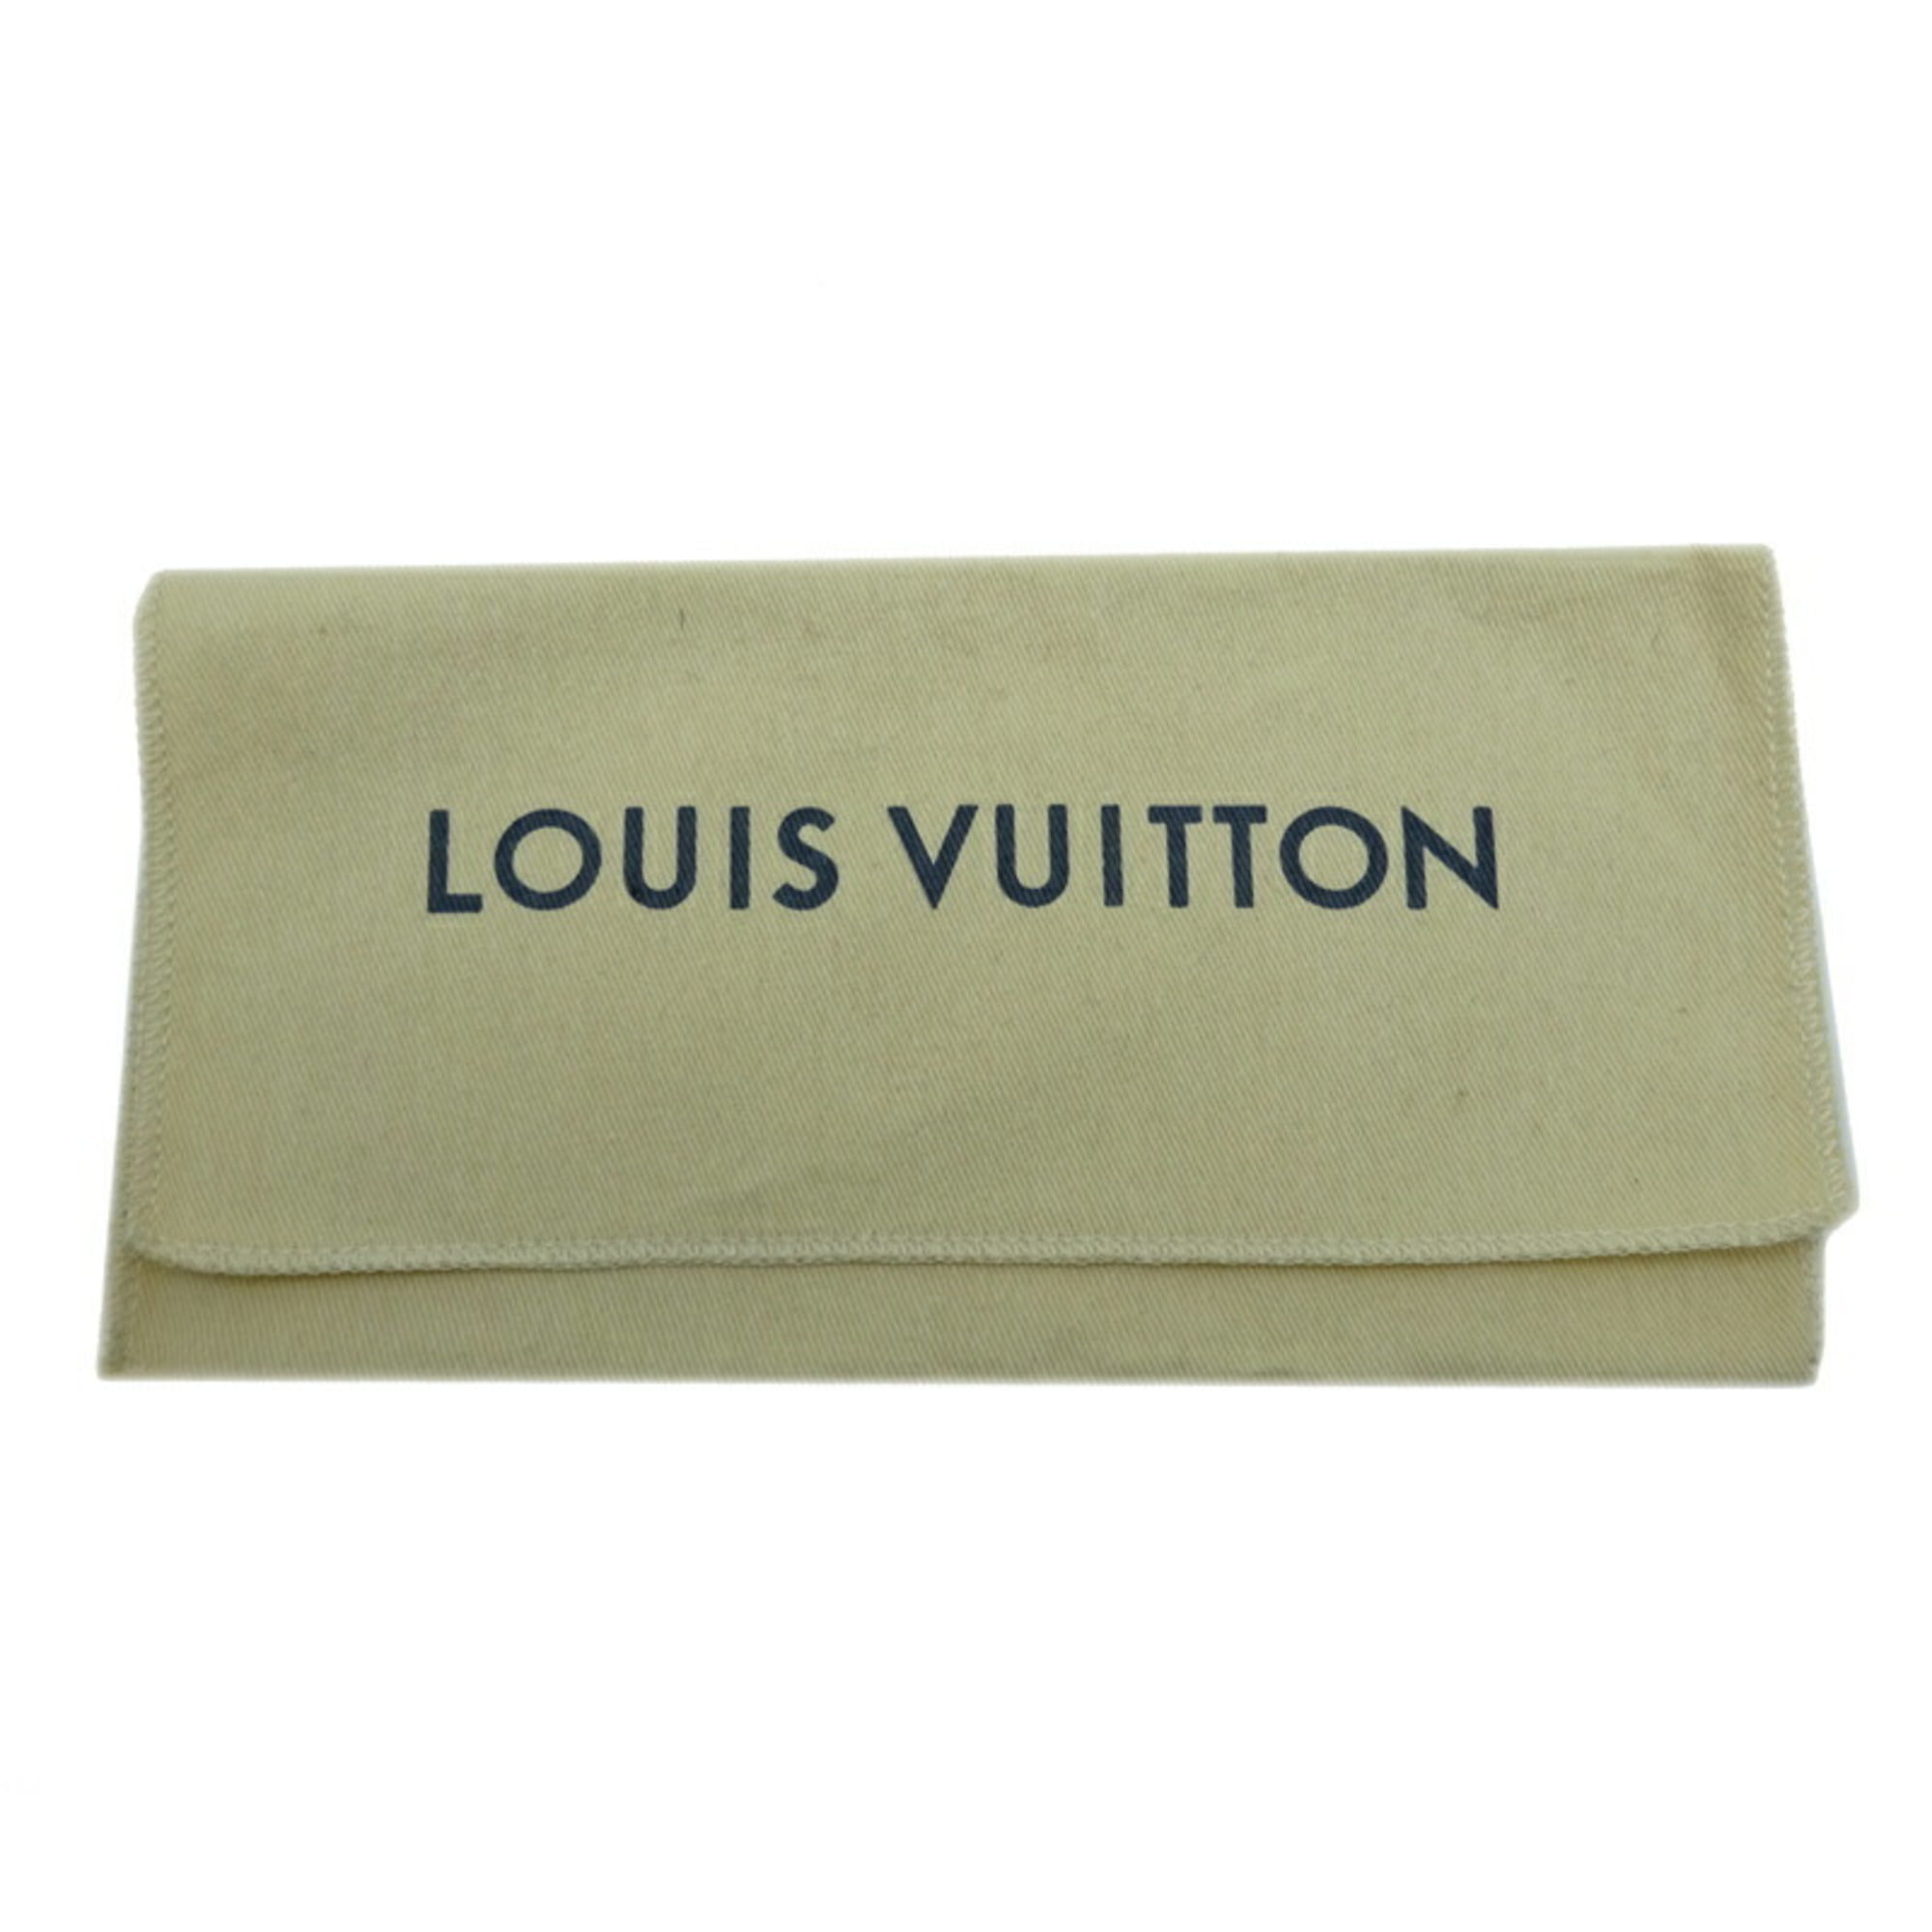 LOUIS VUITTON M60622 Brazza Men's Long Wallet